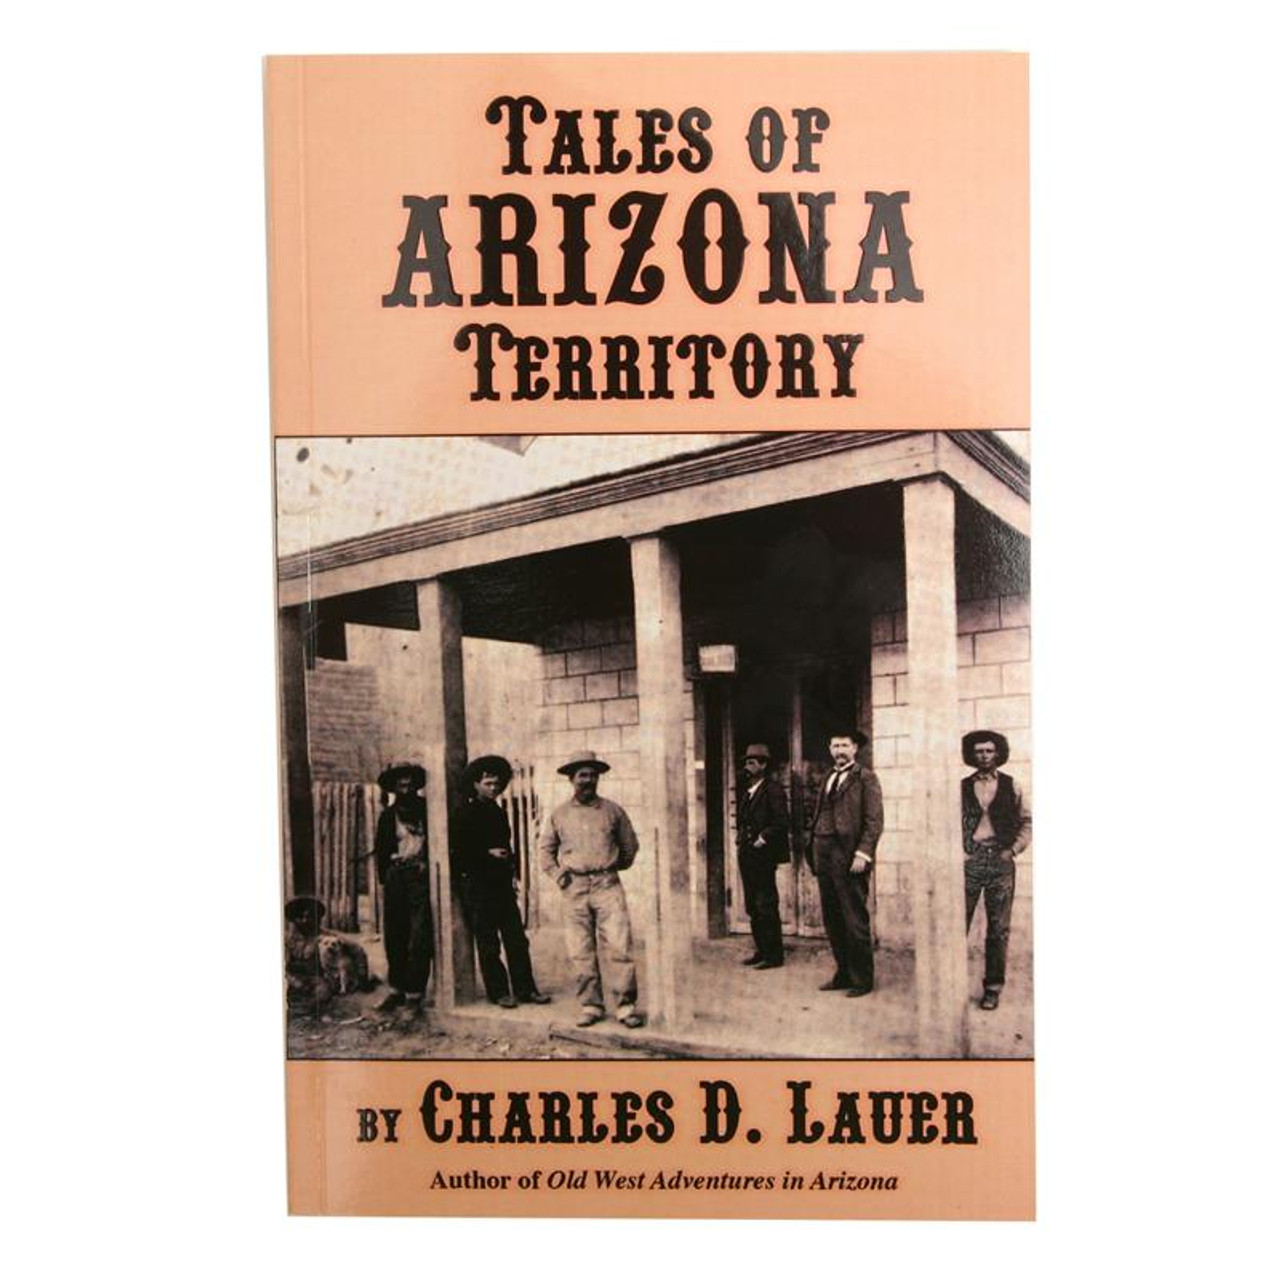 Tales of Arizona Territory